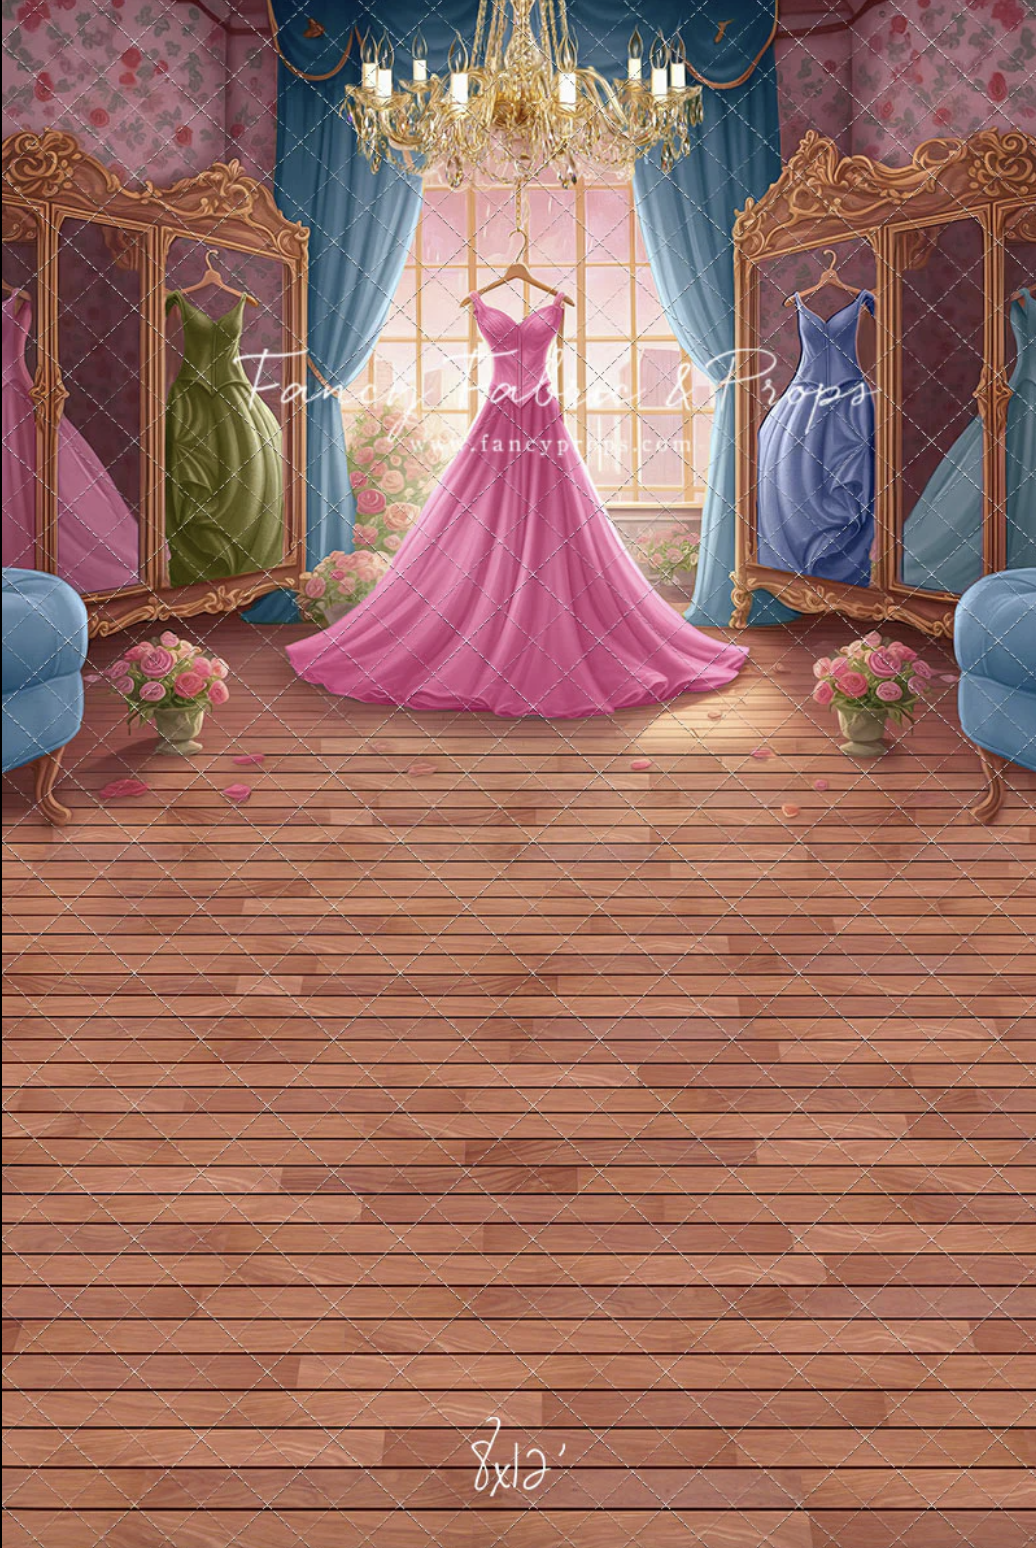 Dress Like A Princess - Pink Dress:Blue Curtains 8x12